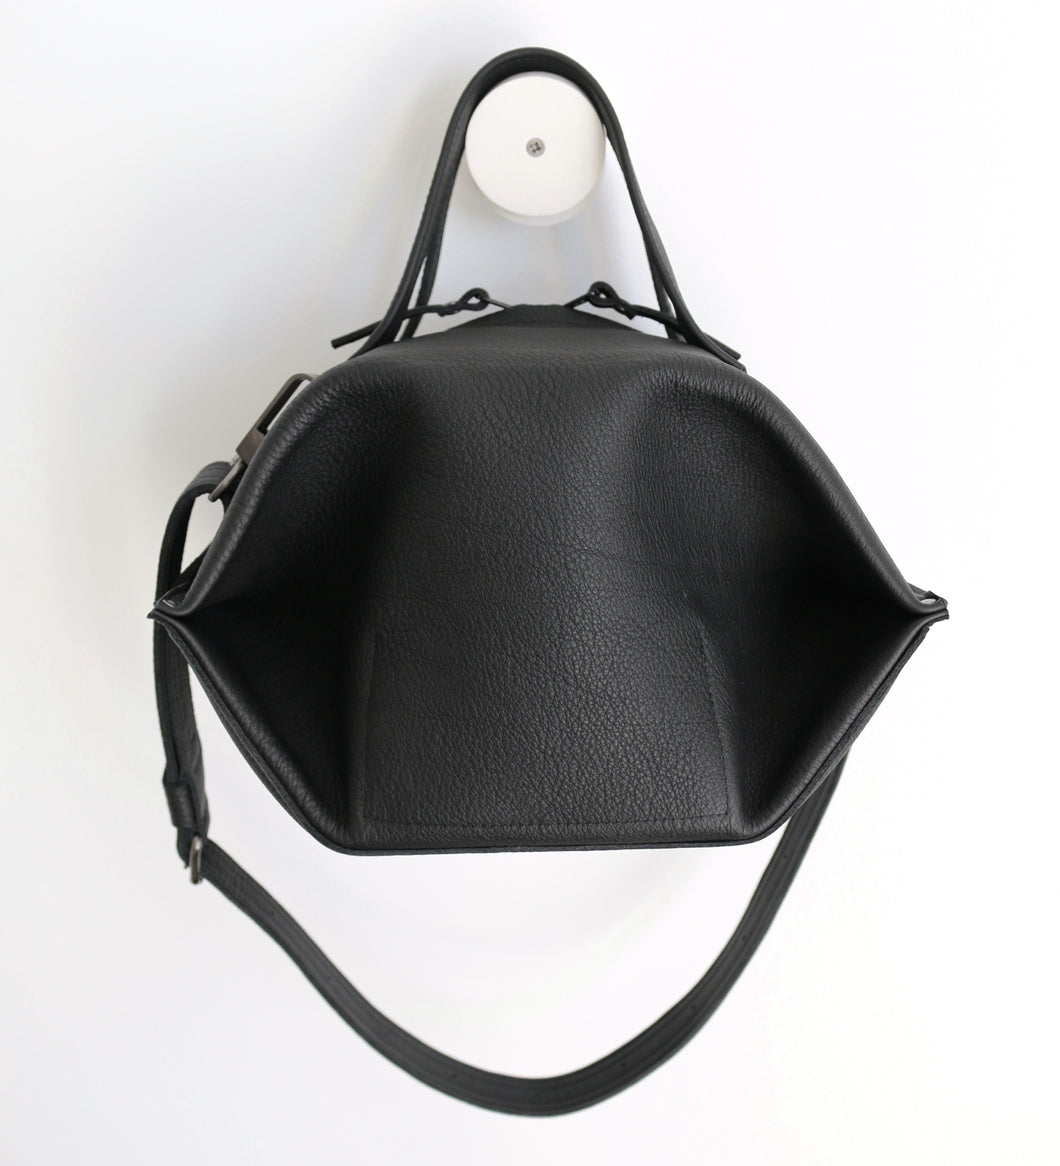 pumpkin frrry. foldable bag. black leather. round shape. plump. zipper closure.